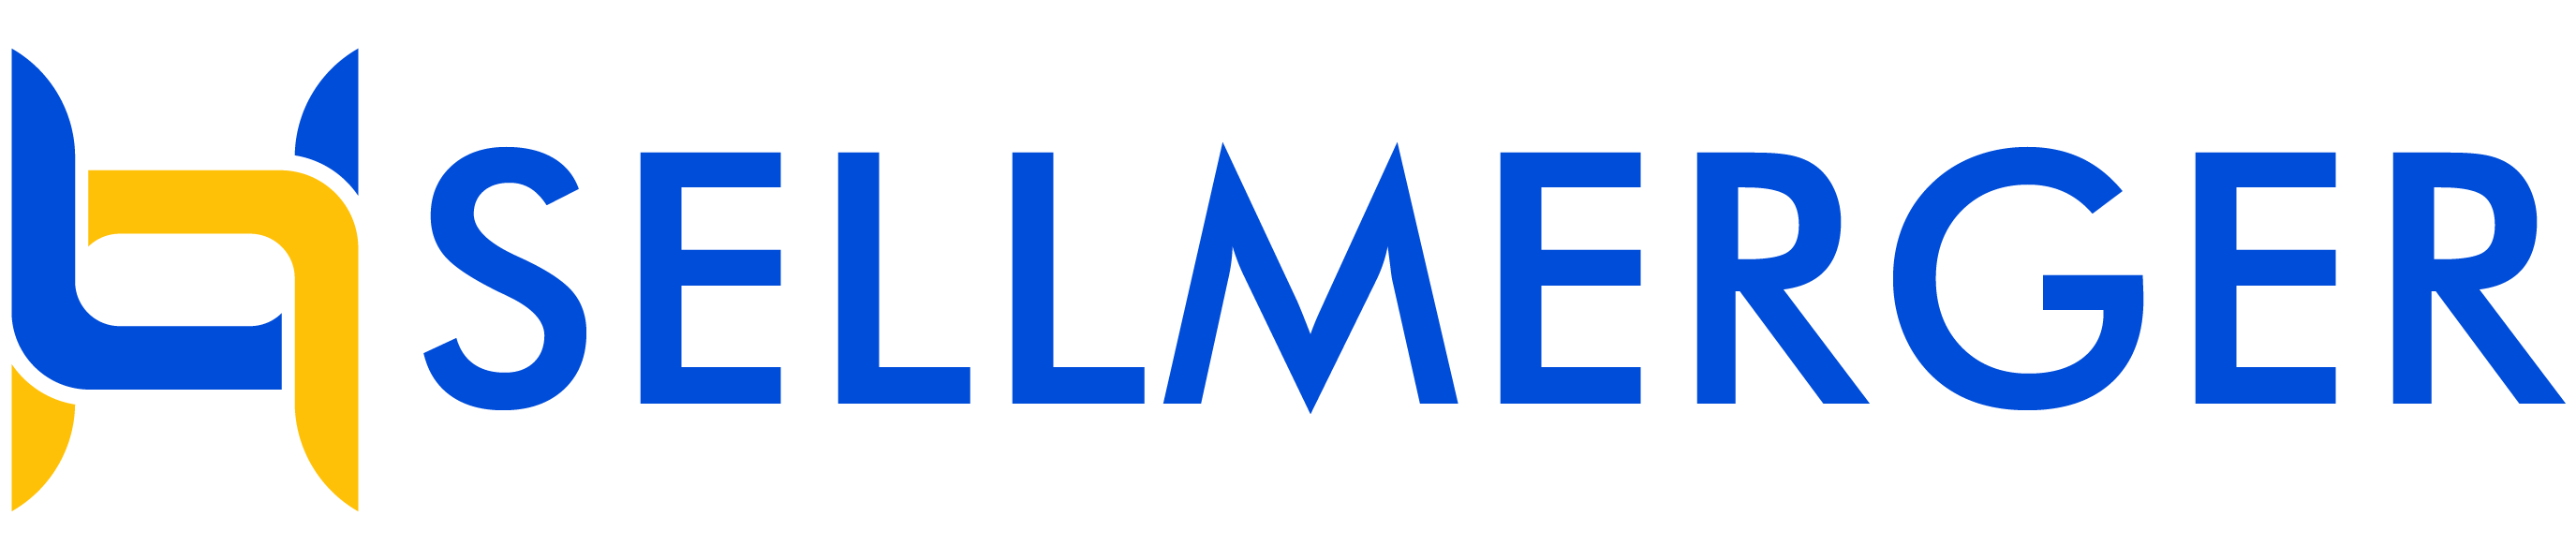 Sellmerger Brand Logo